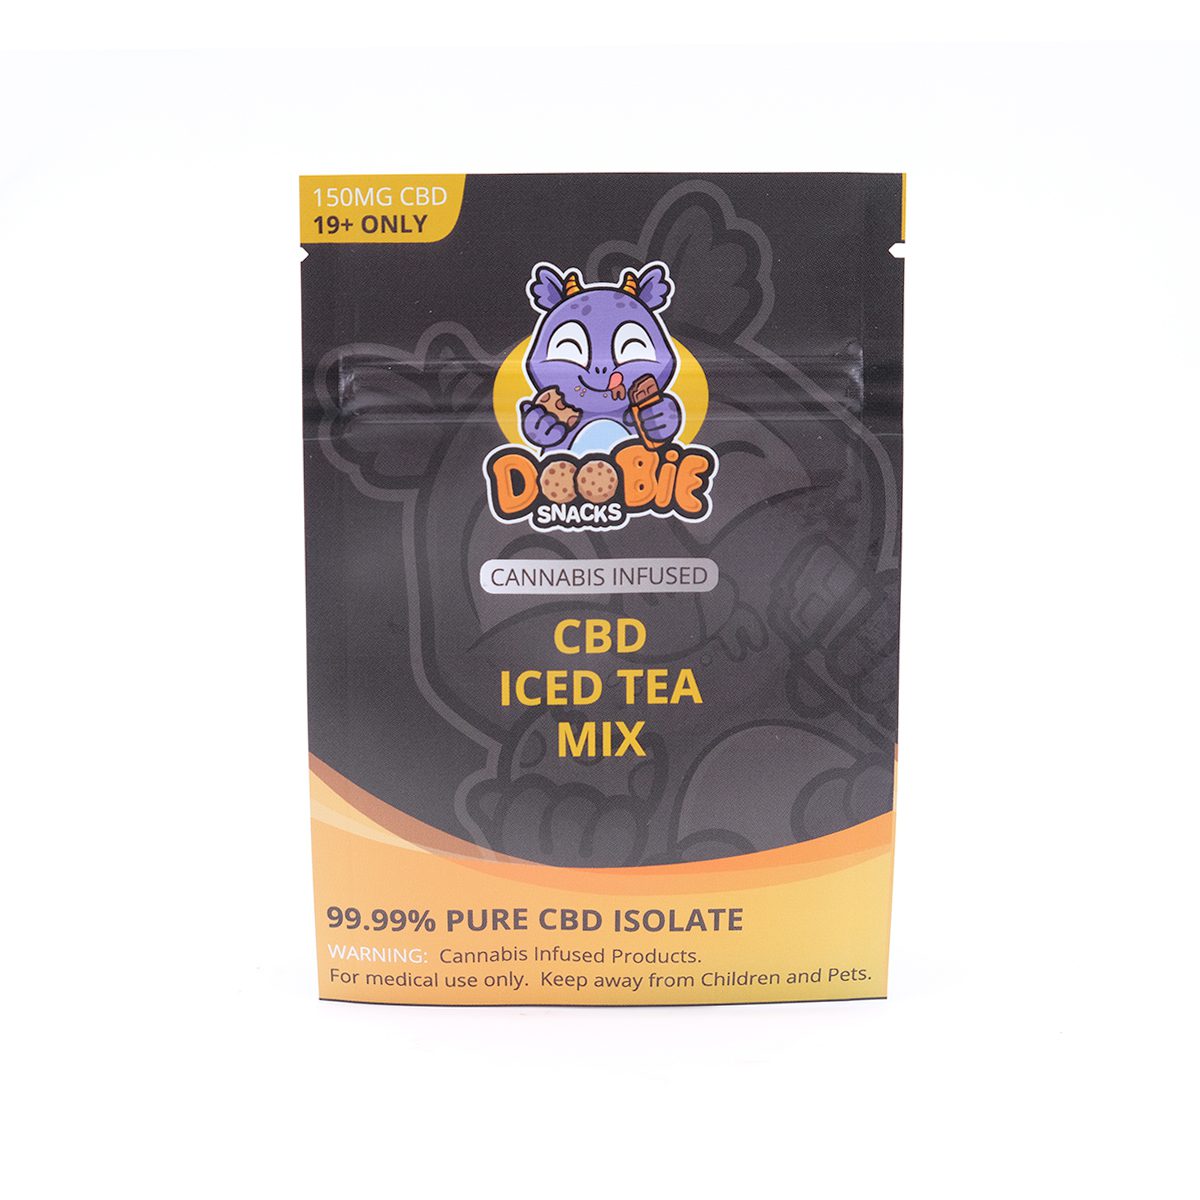 Buy Ice Tea Mix 150mg CBD By Doobie Snacks